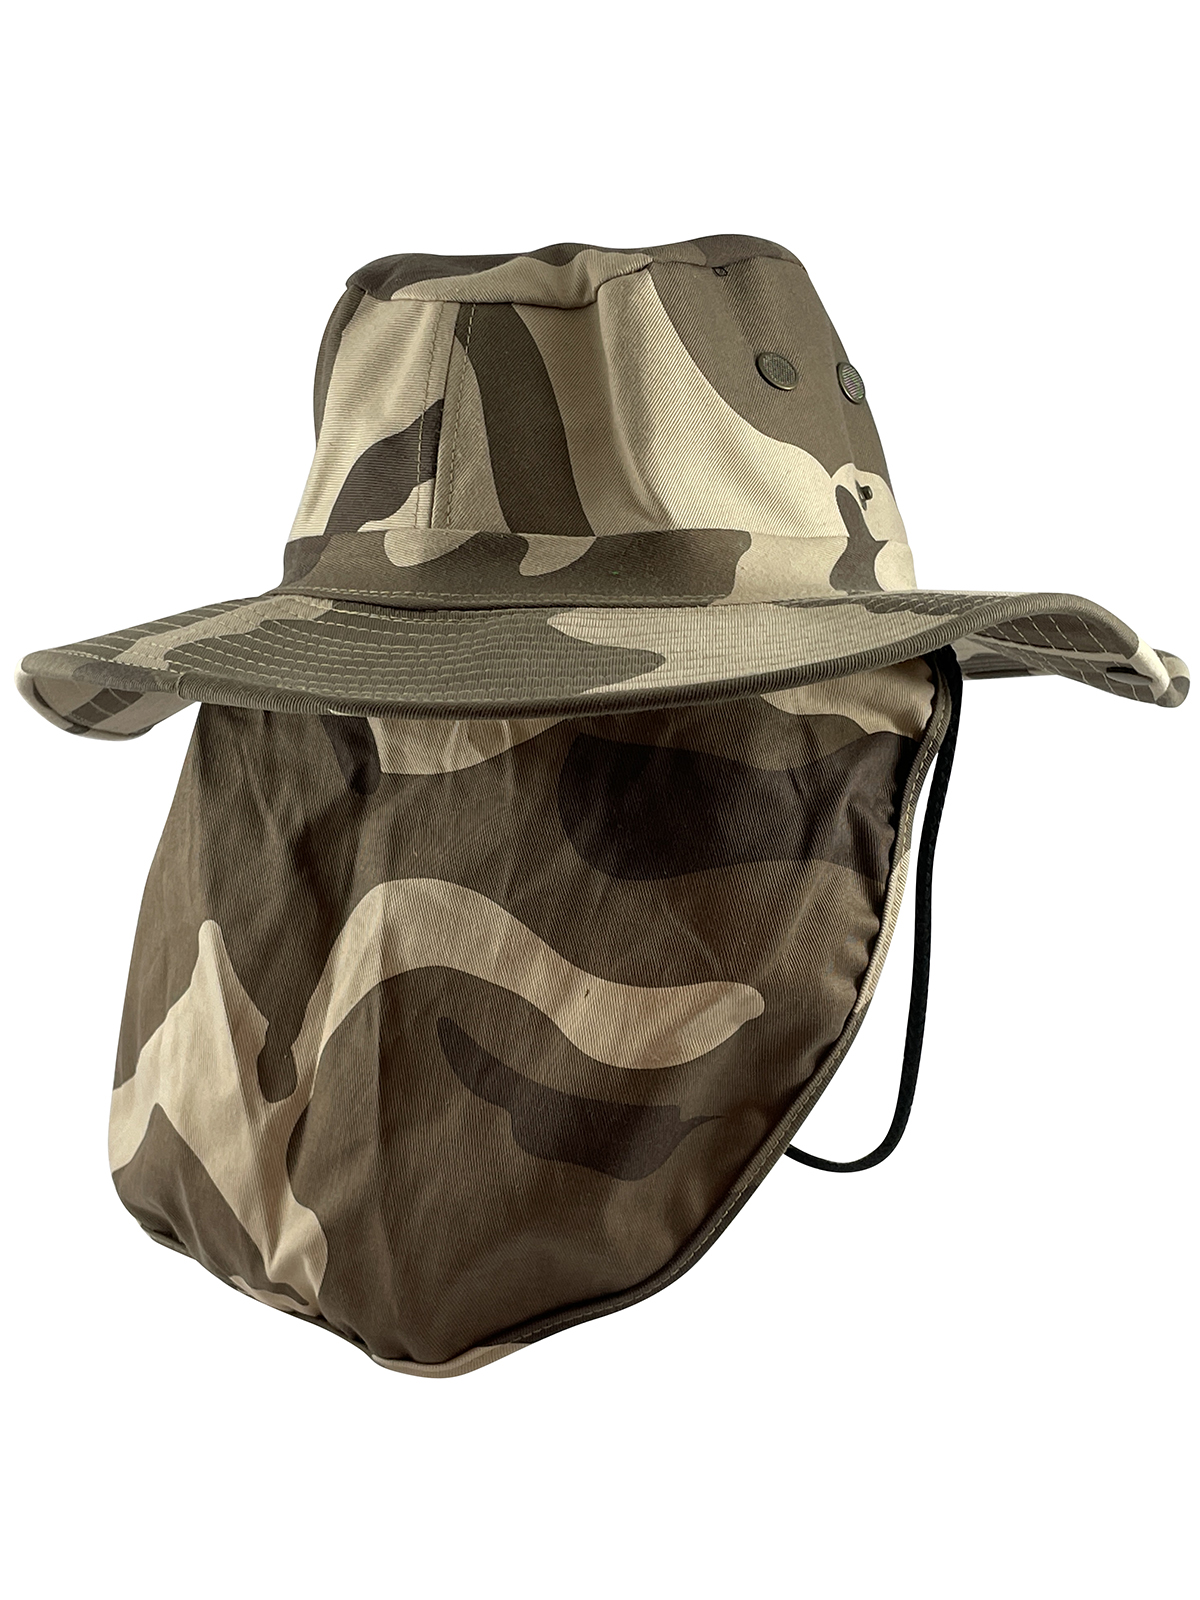 Top Headwear Safari Explorer Bucket Hat Flap Neck Cover - Desert Camo - XL - image 3 of 3